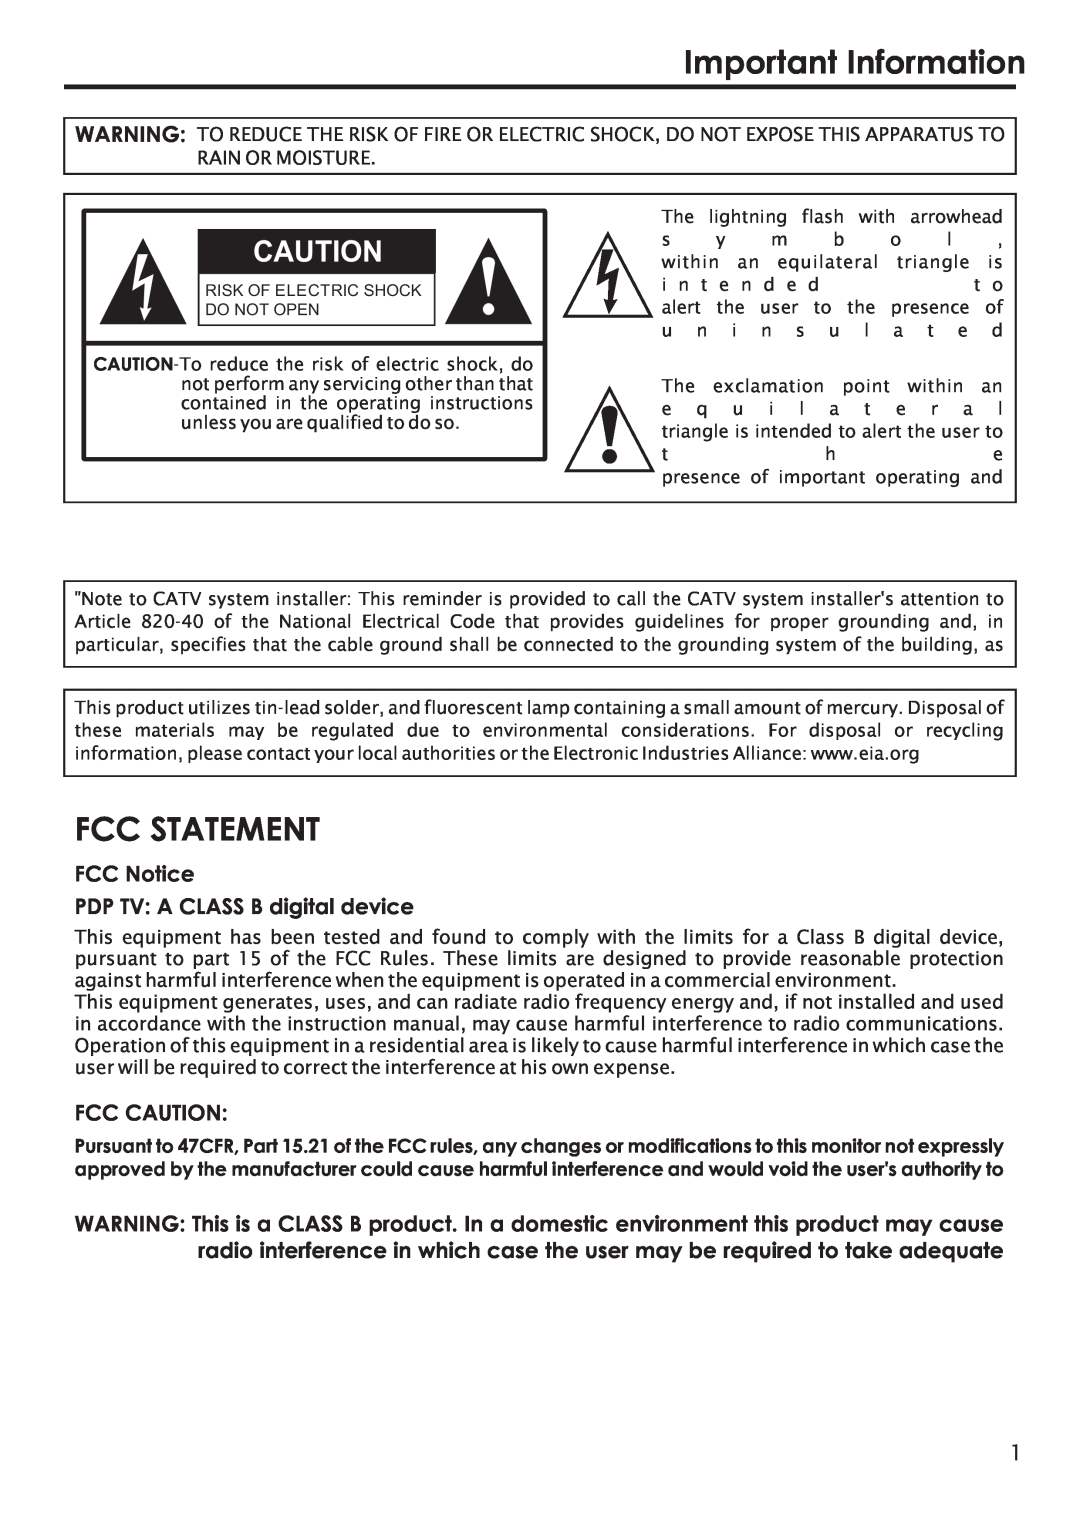 Primate Systems manual Important Information, Fcc Statement, FCC Notice PDP TV A CLASS B digital device, Fcc Caution 